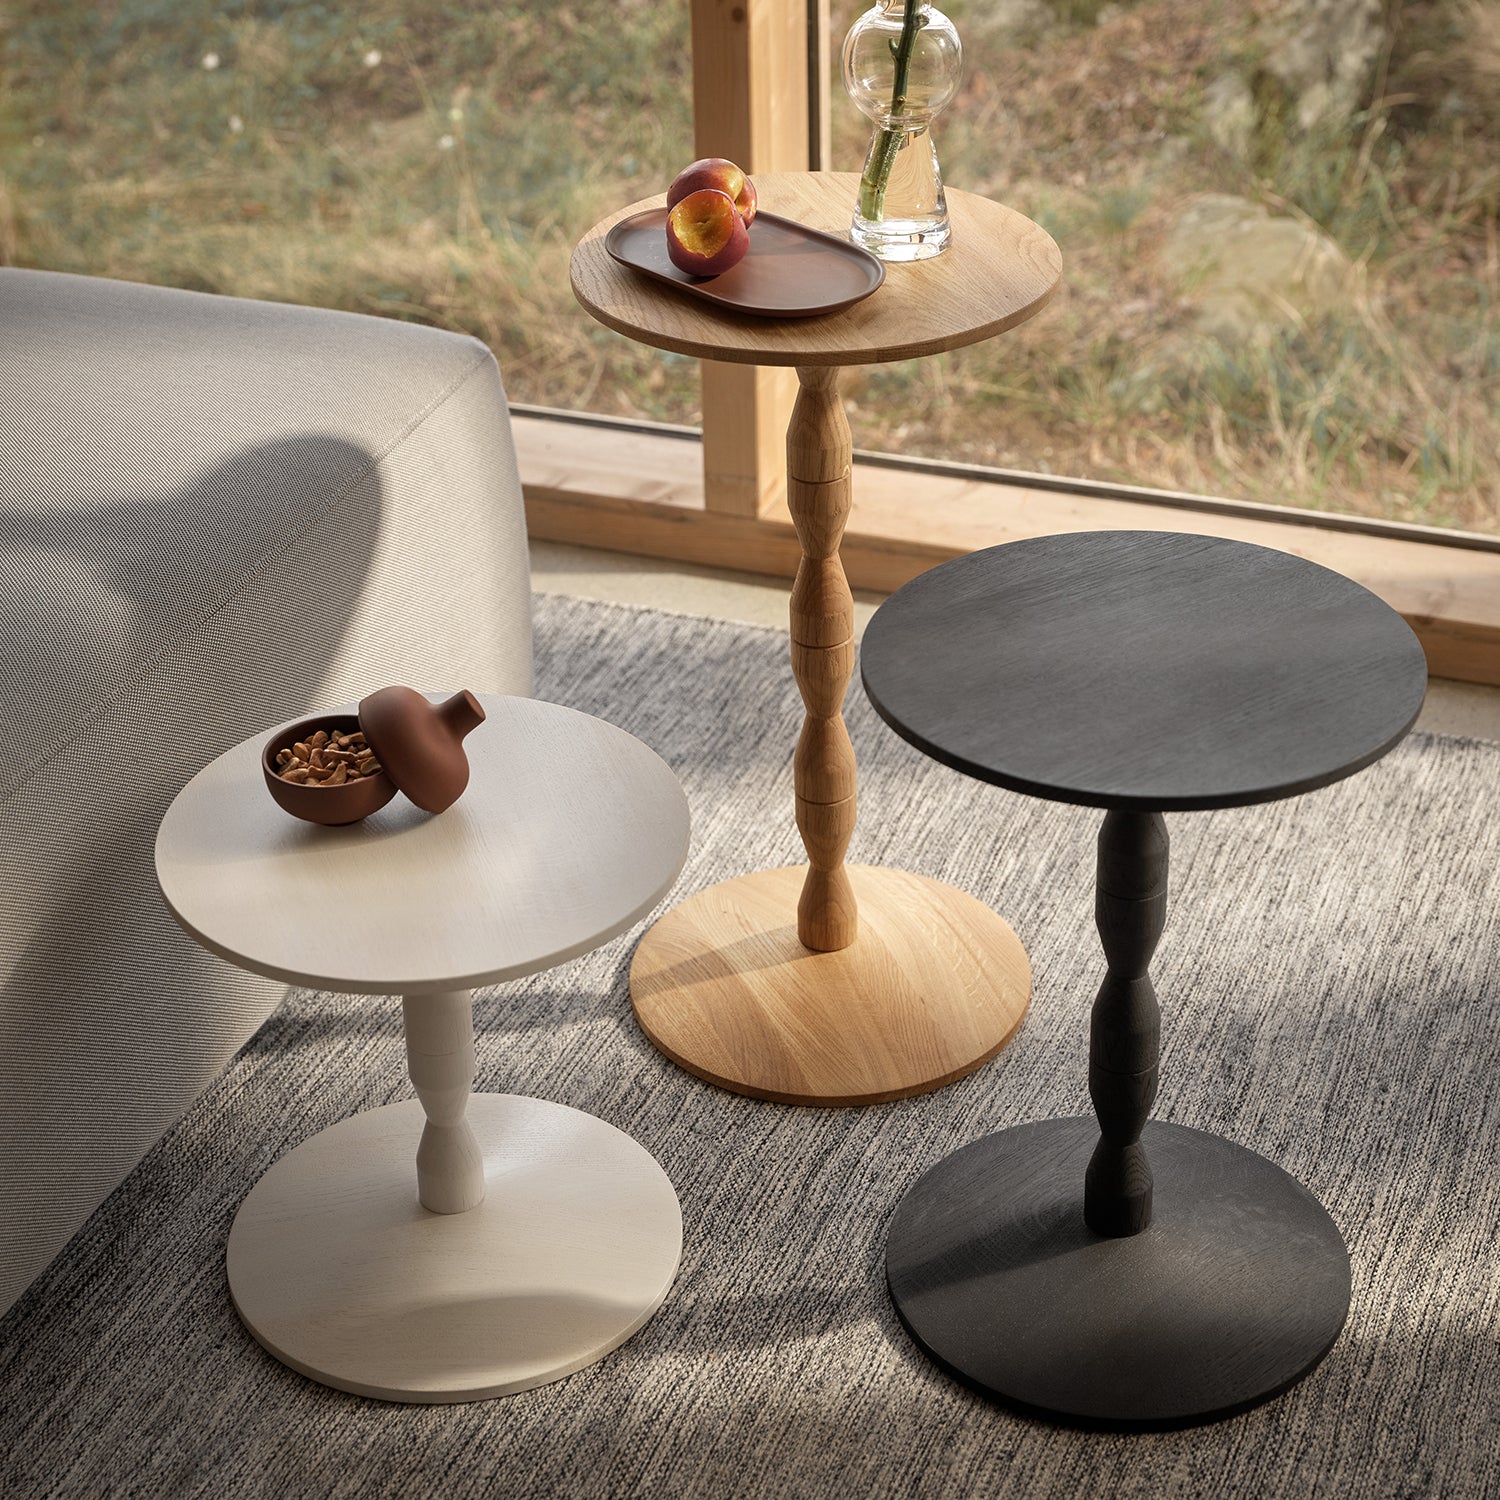 Pedestal Table - The Design Choice